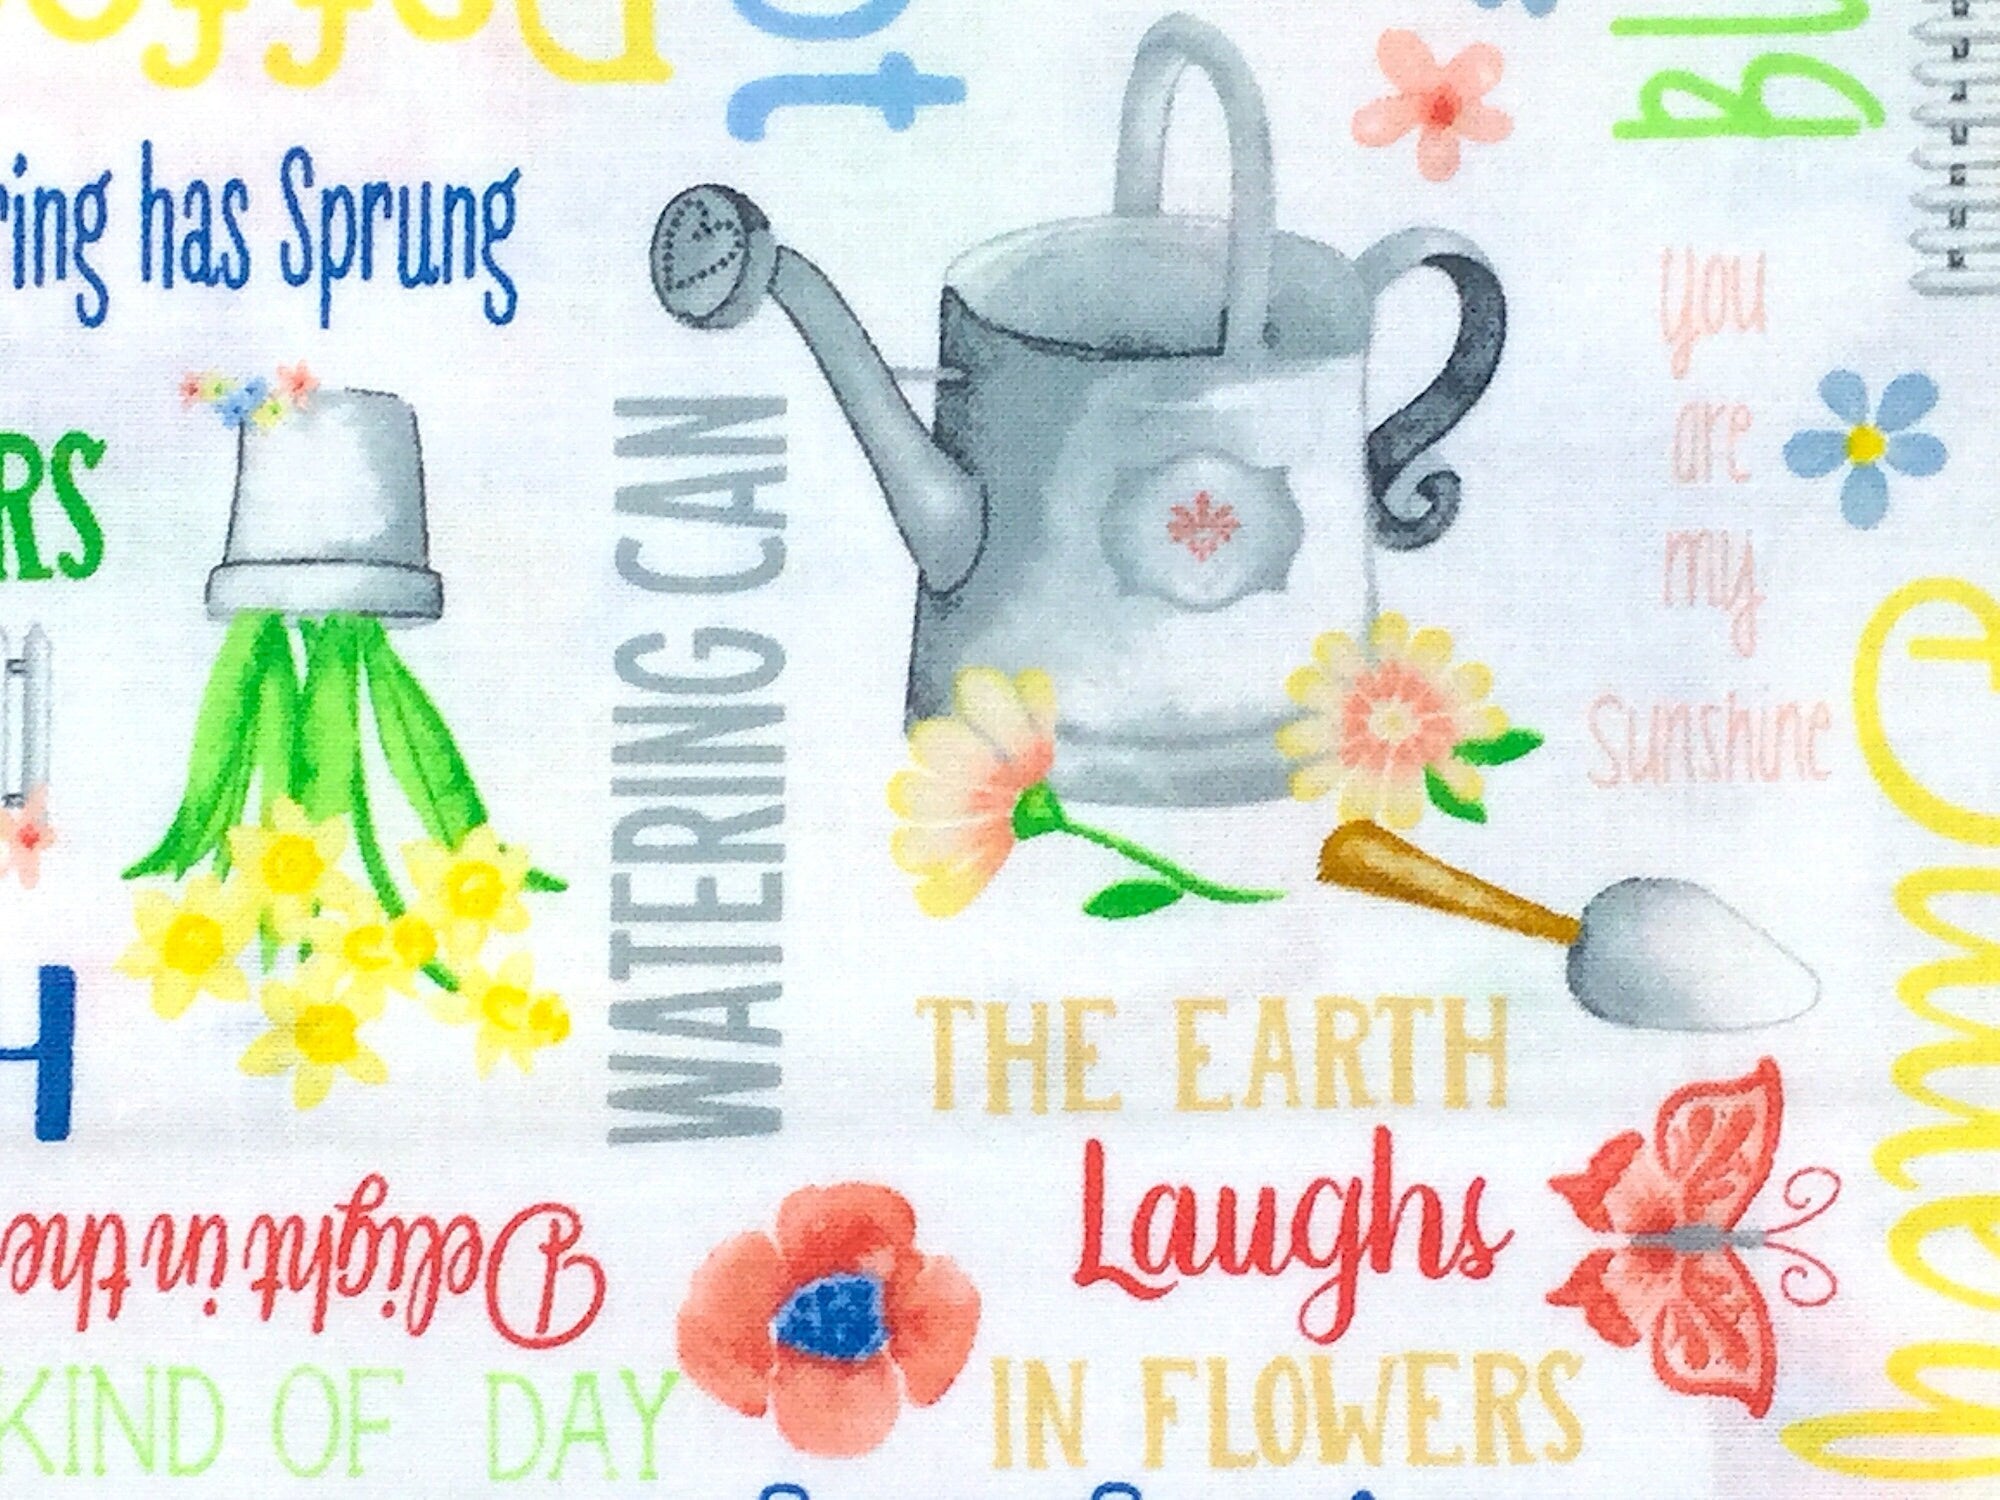 Bunnies & Blossoms - Spring Garden white - Spring Fabric - Kanvas Studio - Cotton Fabric - EAST-07